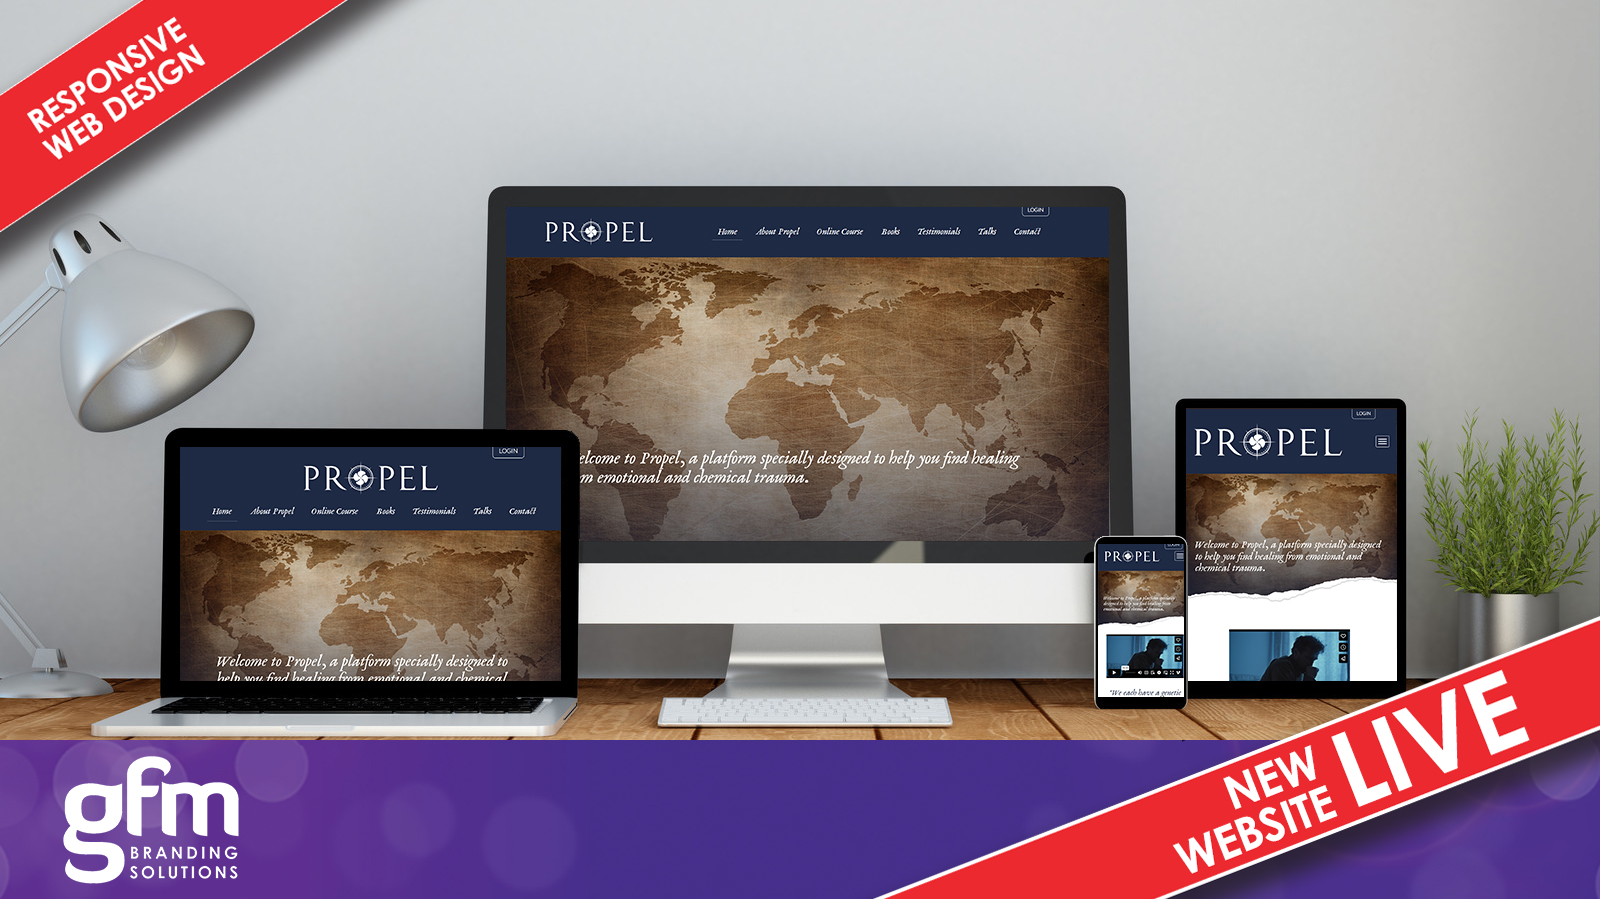 Propel fully responsive website design on multiple screens